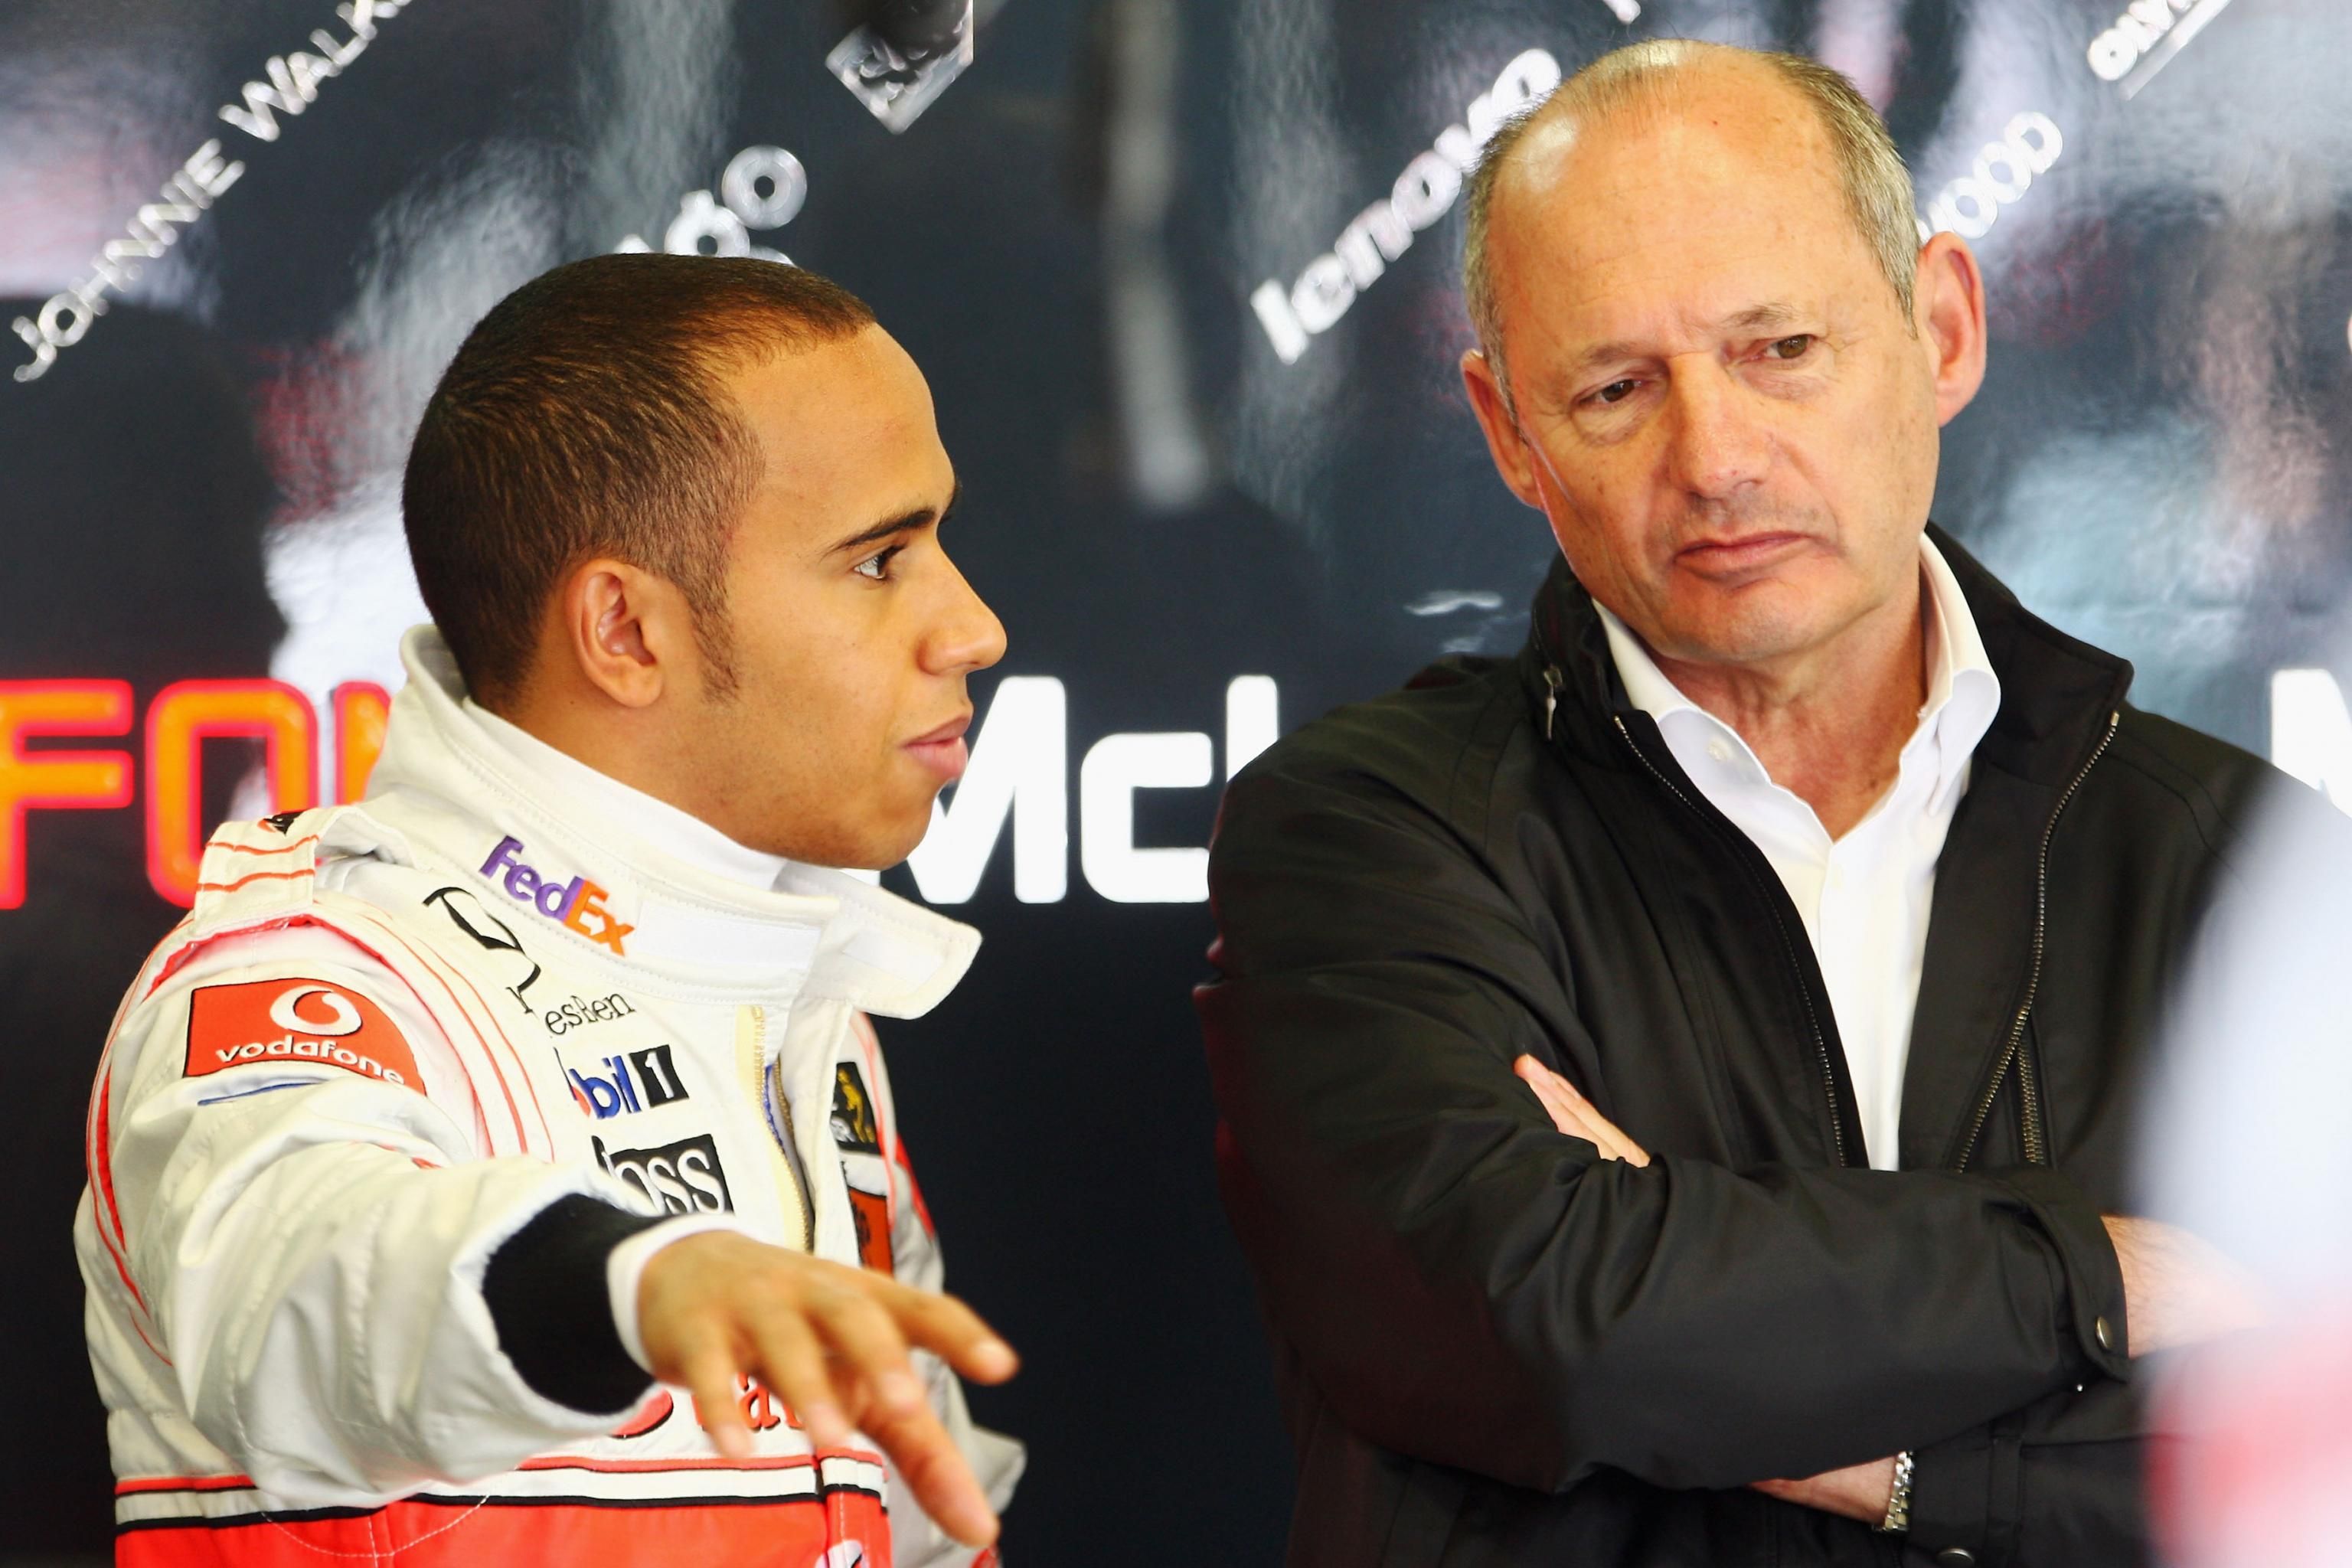 Lewis Hamilton and Ron Dennis in conversation during his McLaren days